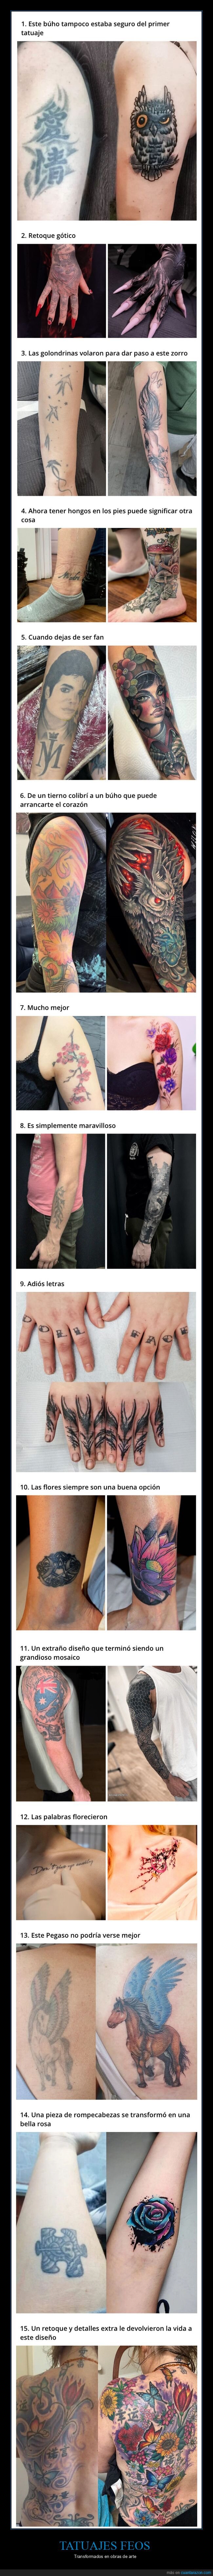 tatuajes,feos,arreglados,antes,después